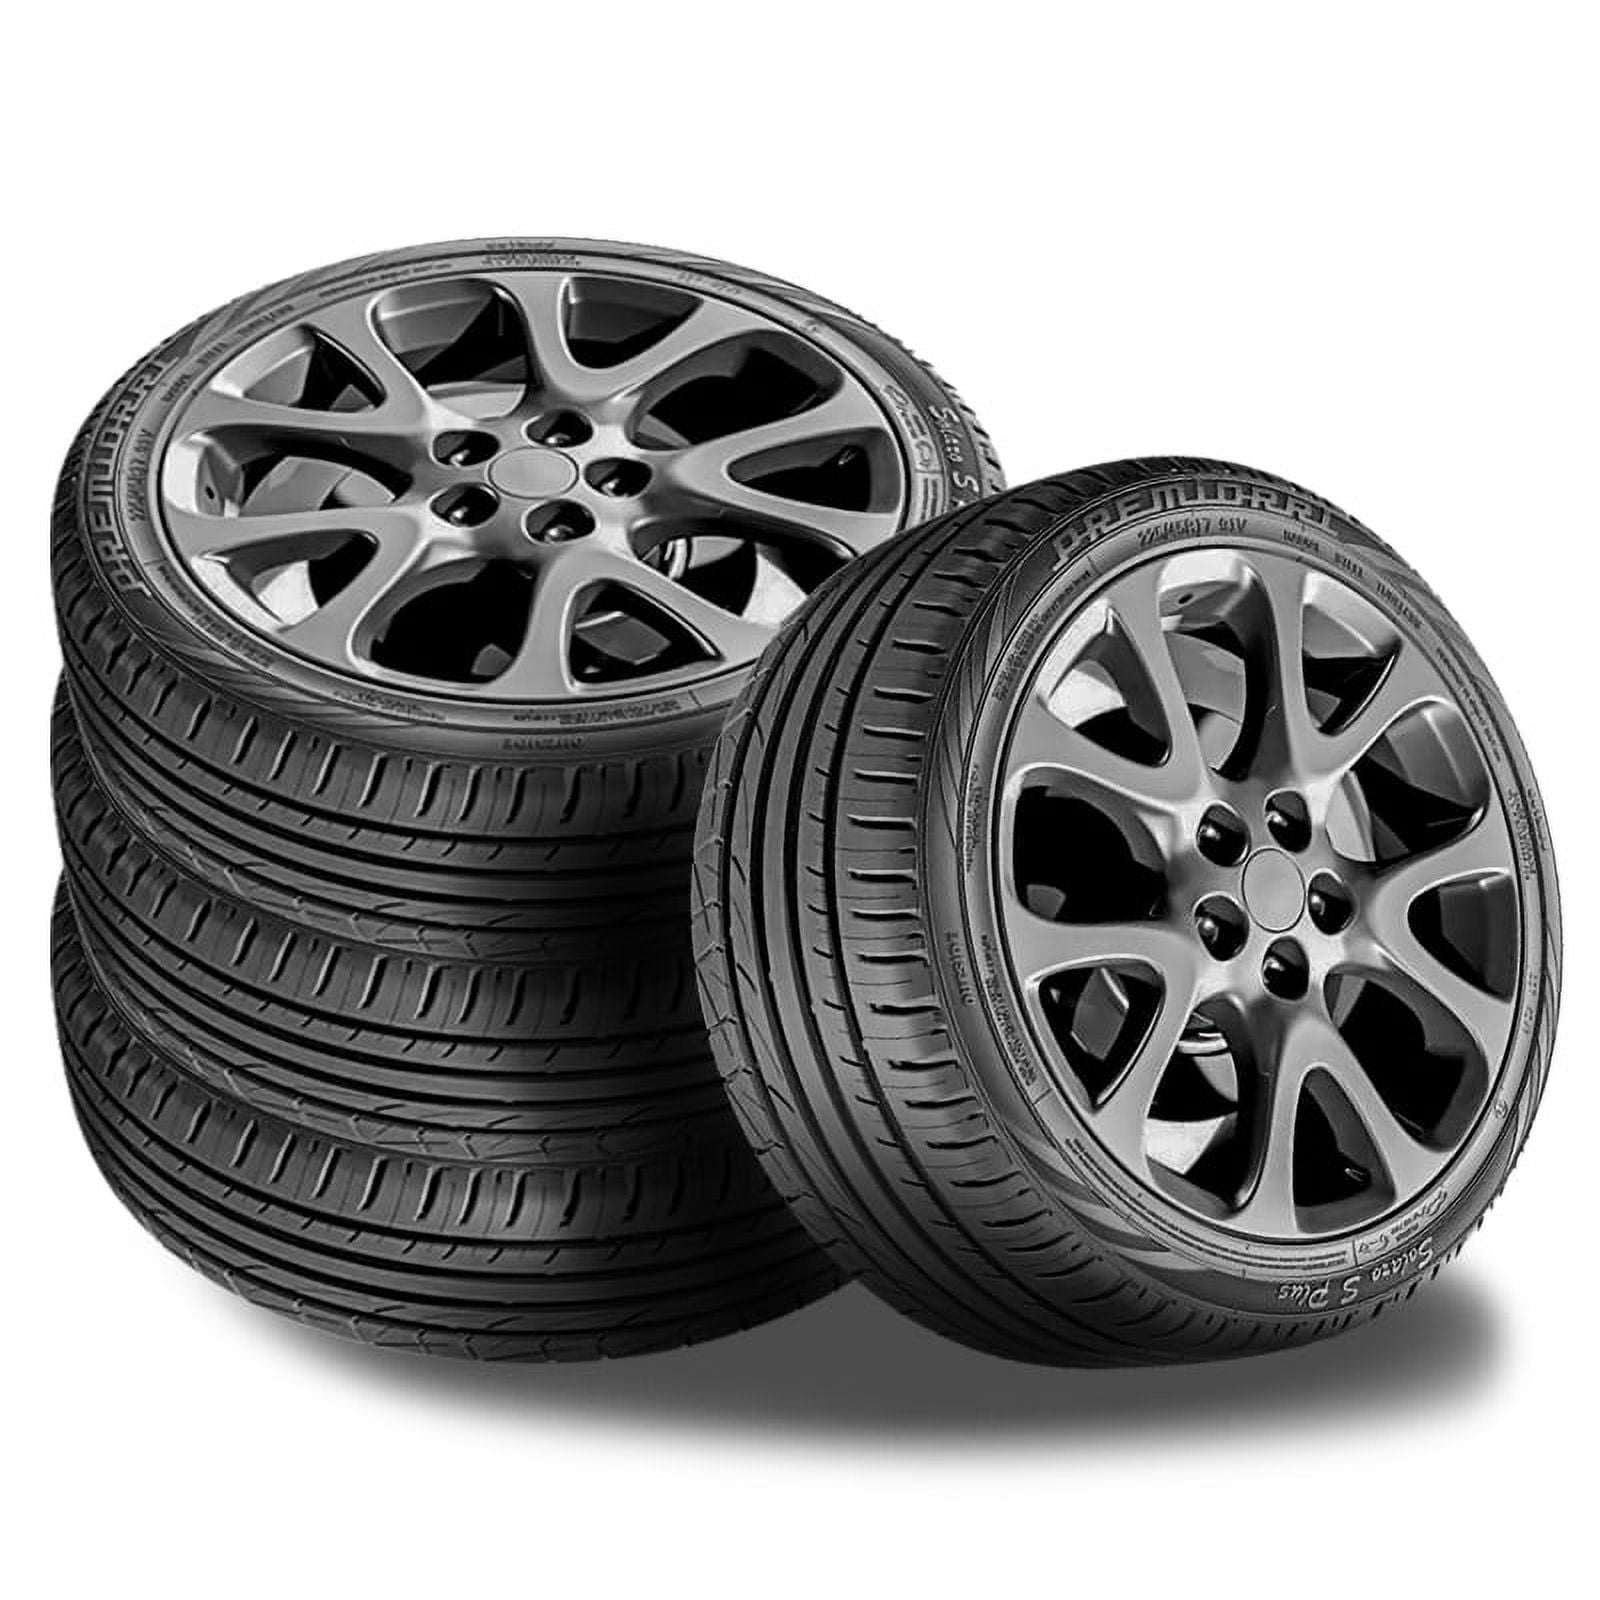  Premiorri Solazo Summer Passenger Car Performance Radial Tire- 205/55R16 205/55/16 205/55-16 91V Load Range SL 4-Ply BSW Black Side Wall :  Clothing, Shoes & Jewelry